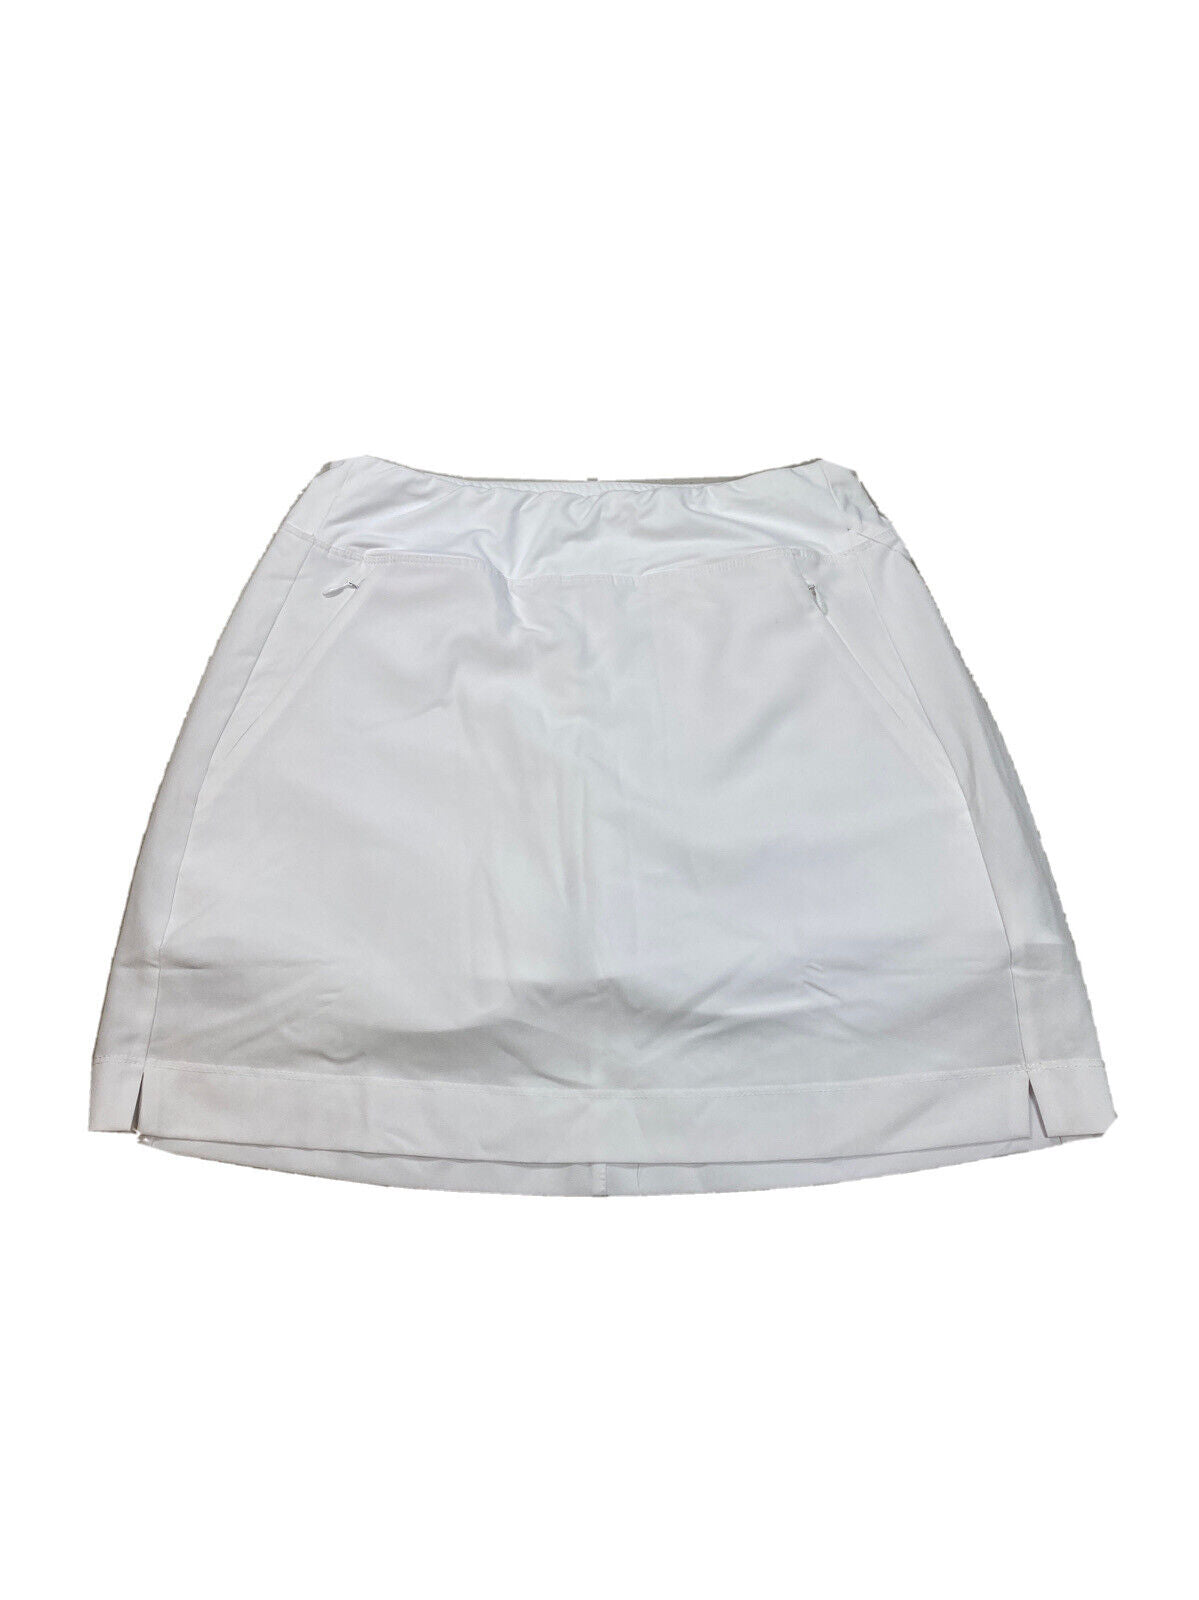 NEW IBKUL Women's White Solid White UPF 50+ Lined Athletic Skort - XS